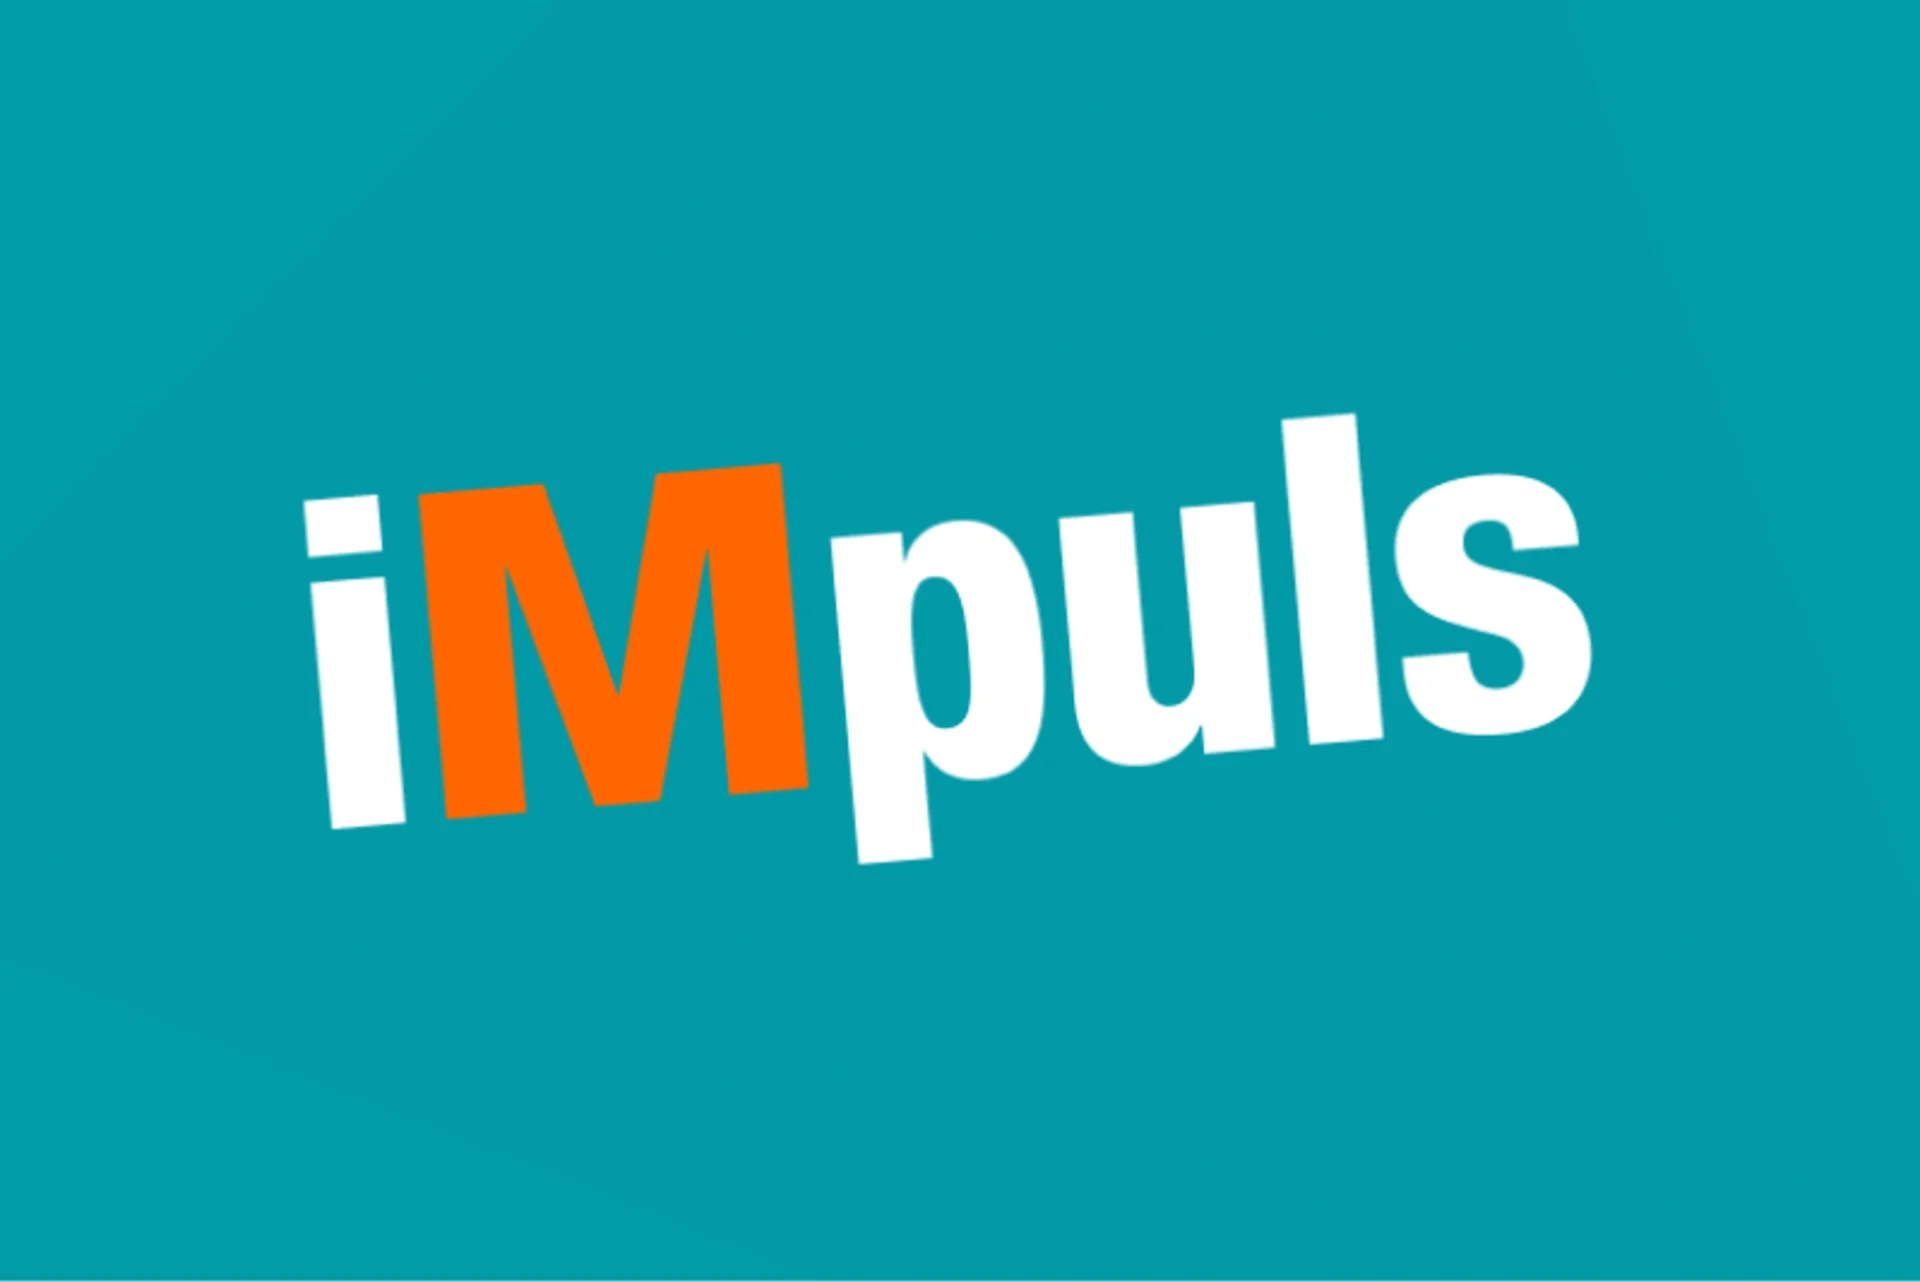 Logo iMpuls su sfondo turchese.